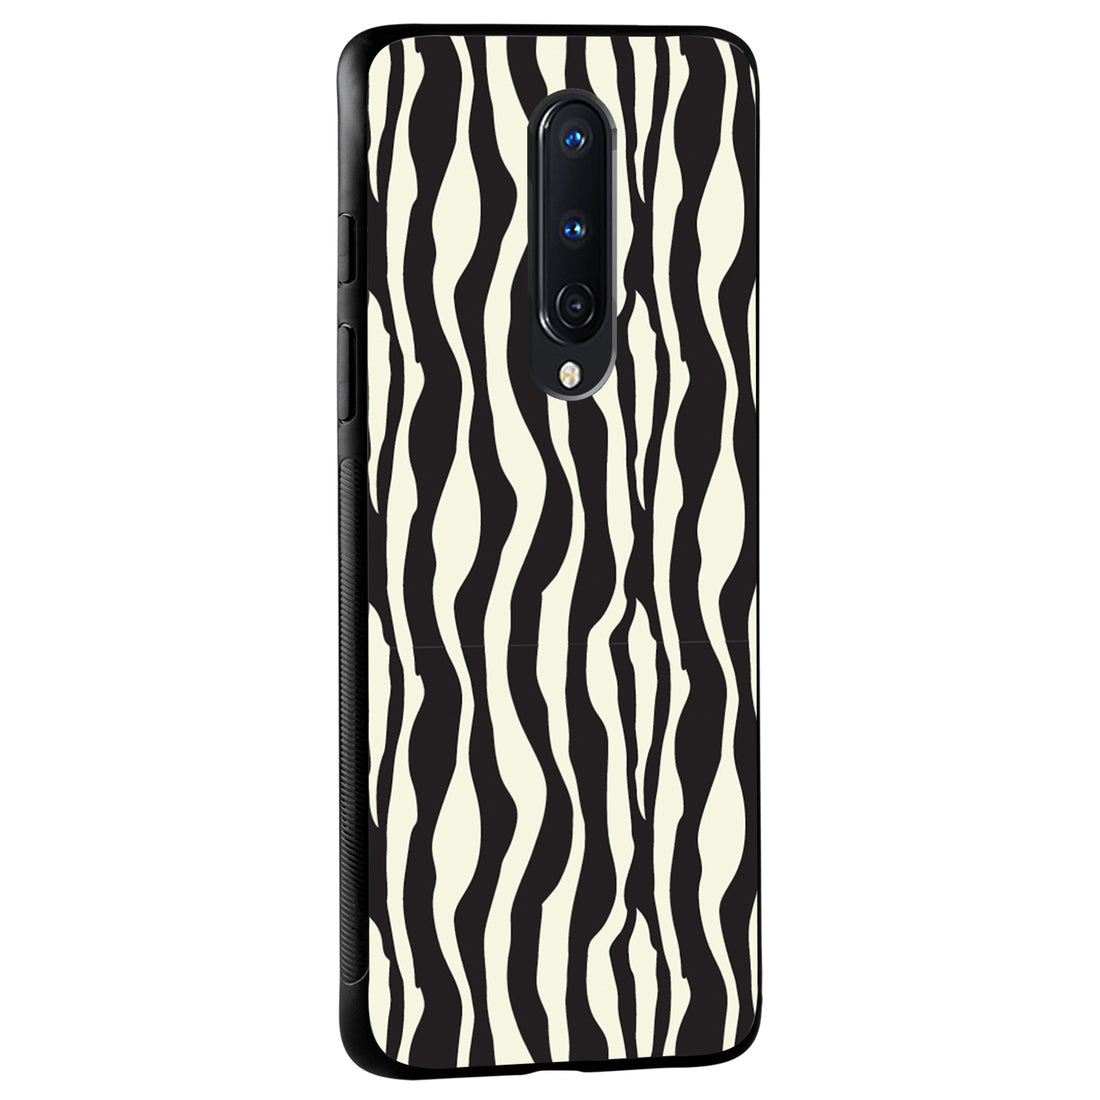 Zebra Animal Print Oneplus 8 Back Case